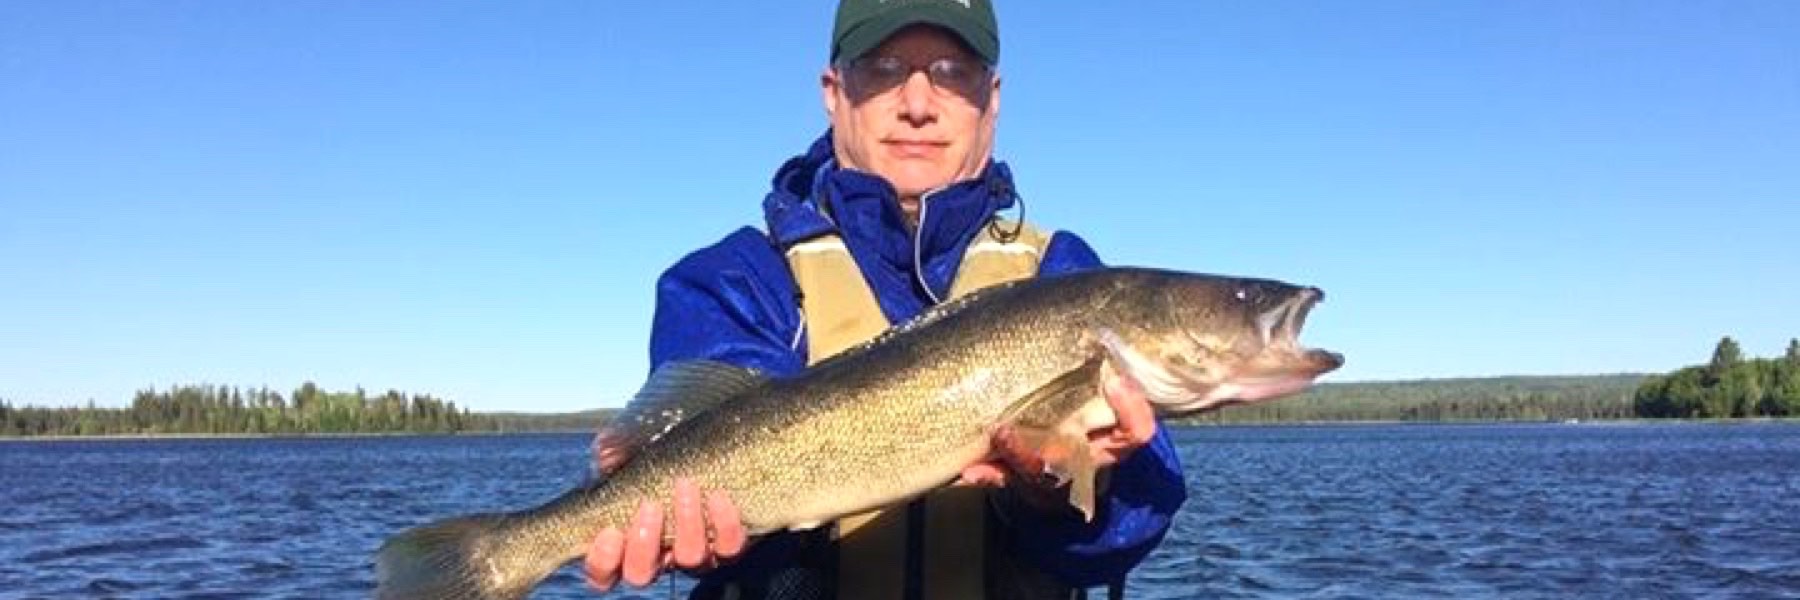 Pristine Waters, Trophy Walleye Fishing - Loch Island Lodge and Camp Lochalsh - Ontario, Canada